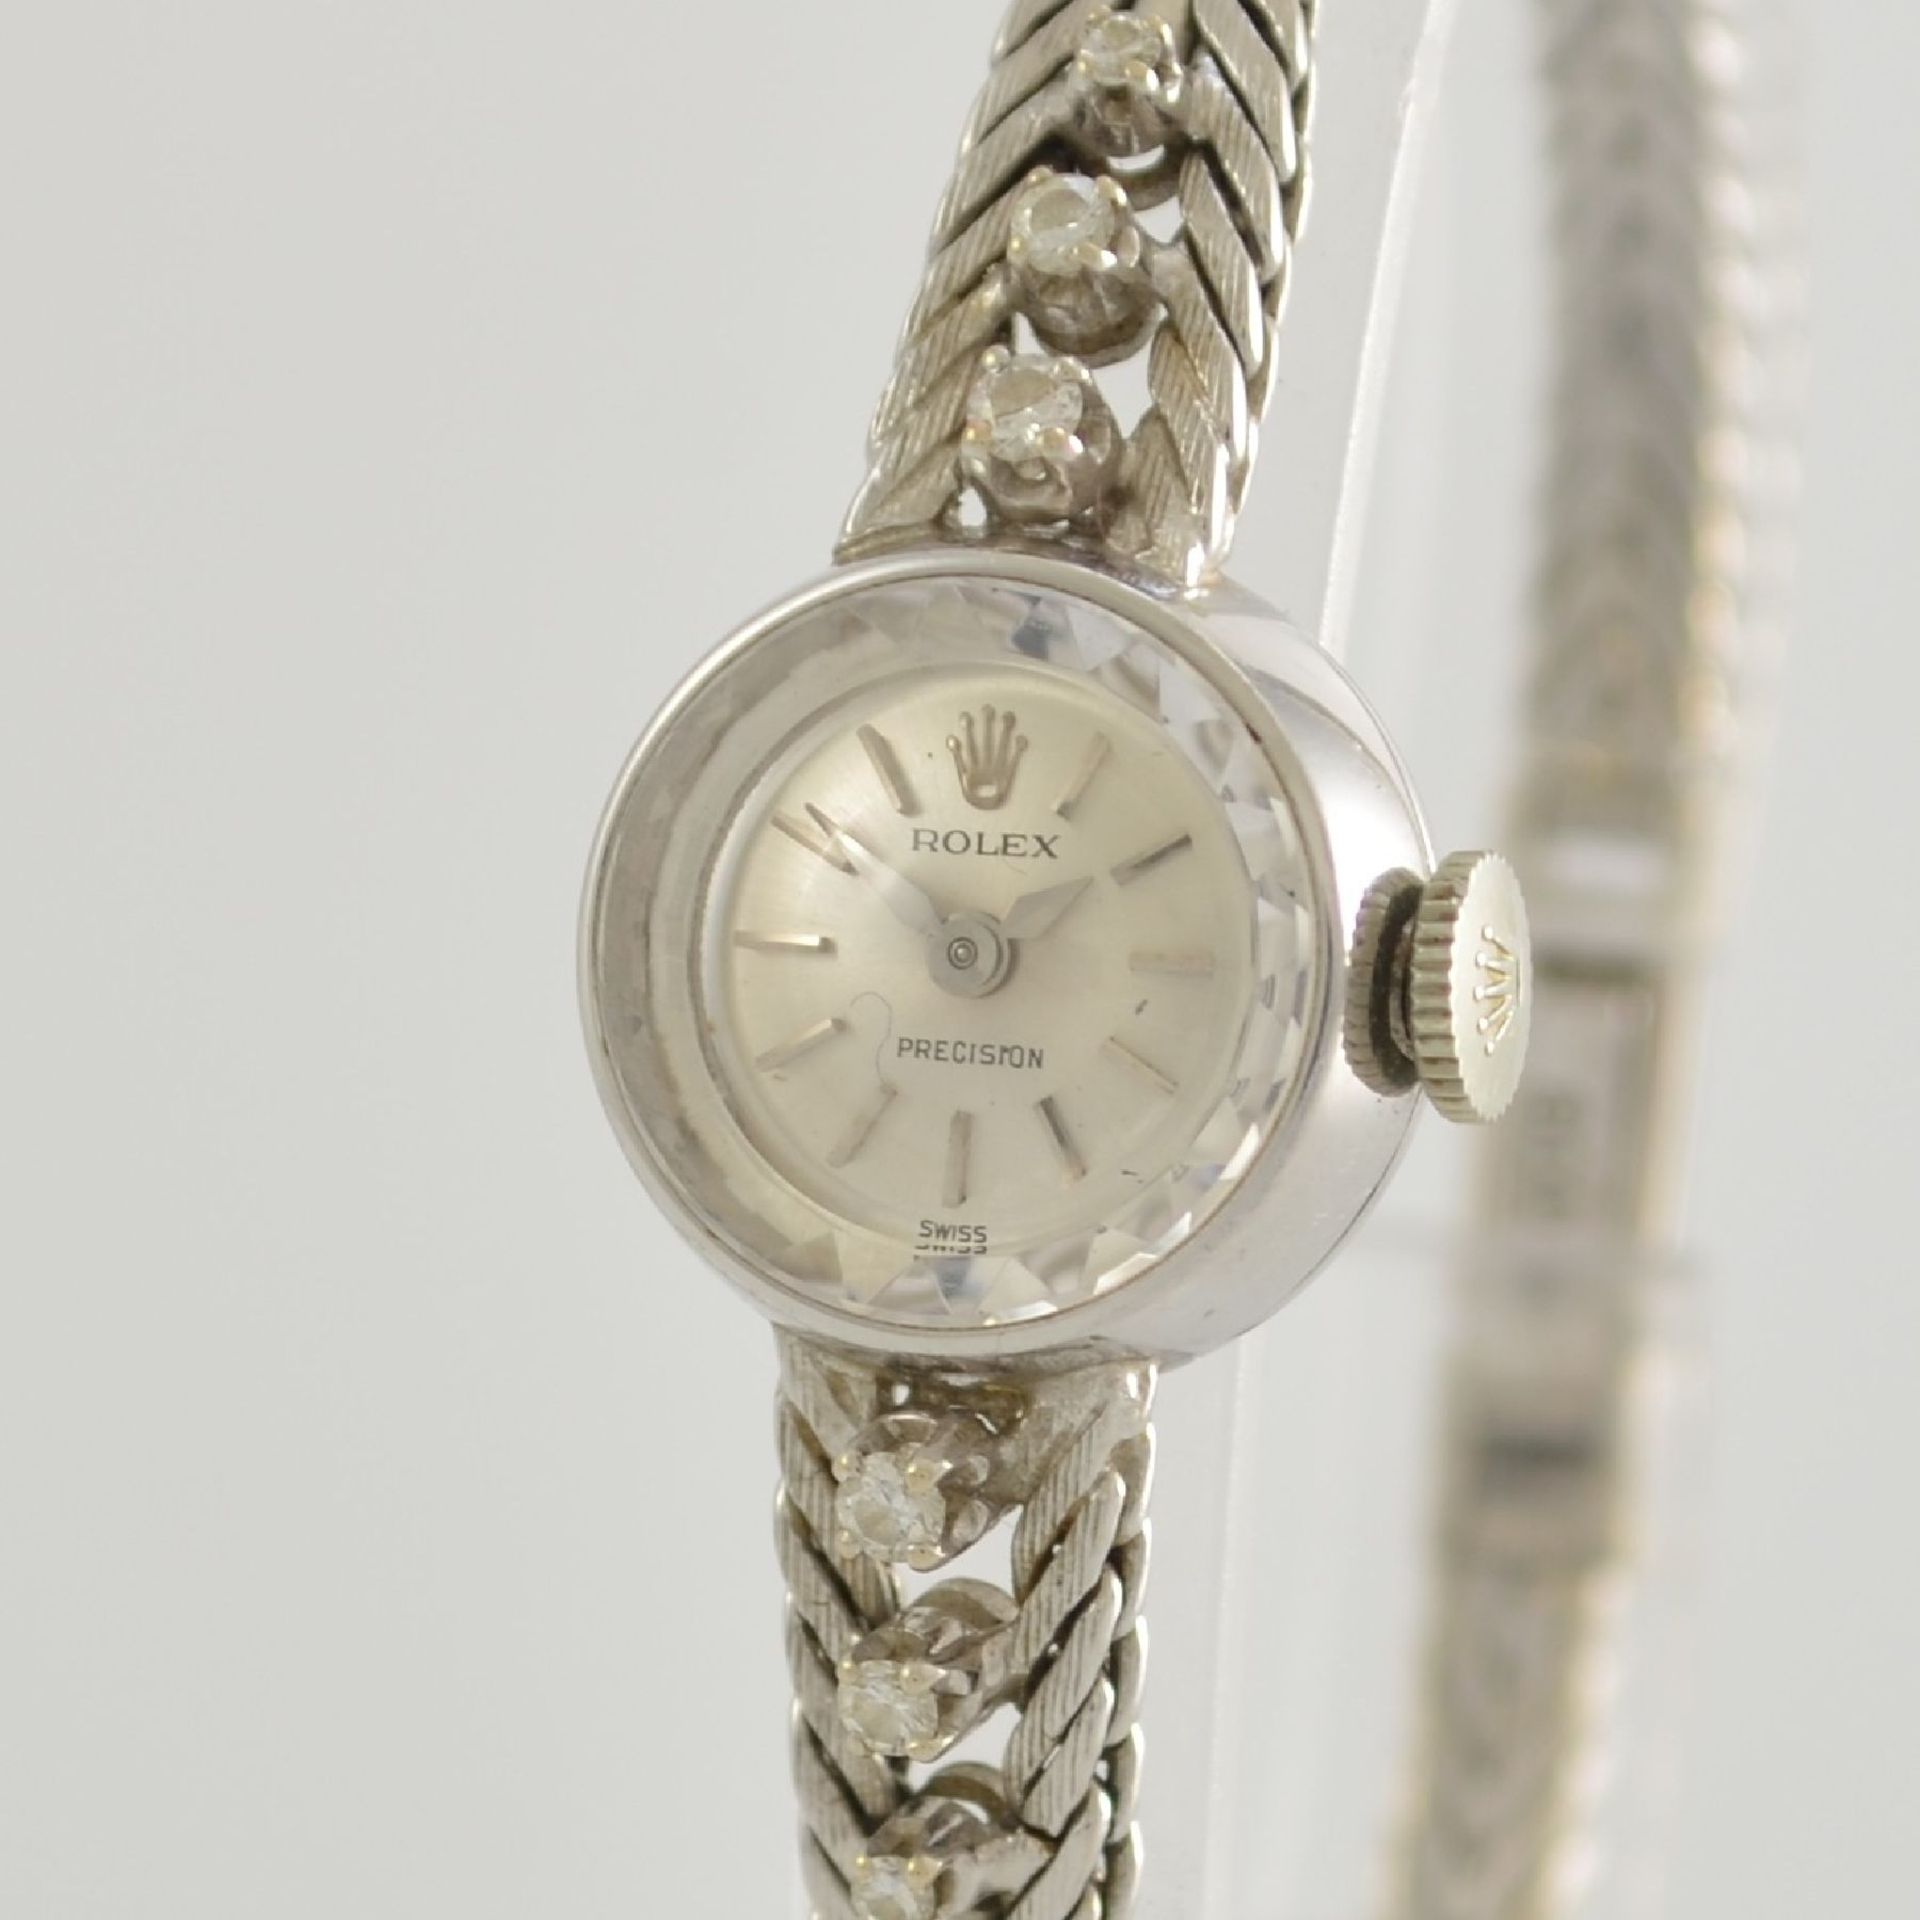 ROLEX Precision Damengolduhr in WG 750/000, Handaufzug, Schweiz 1960er Jahre, inkl. neutr. (CB)WG - Bild 5 aus 10